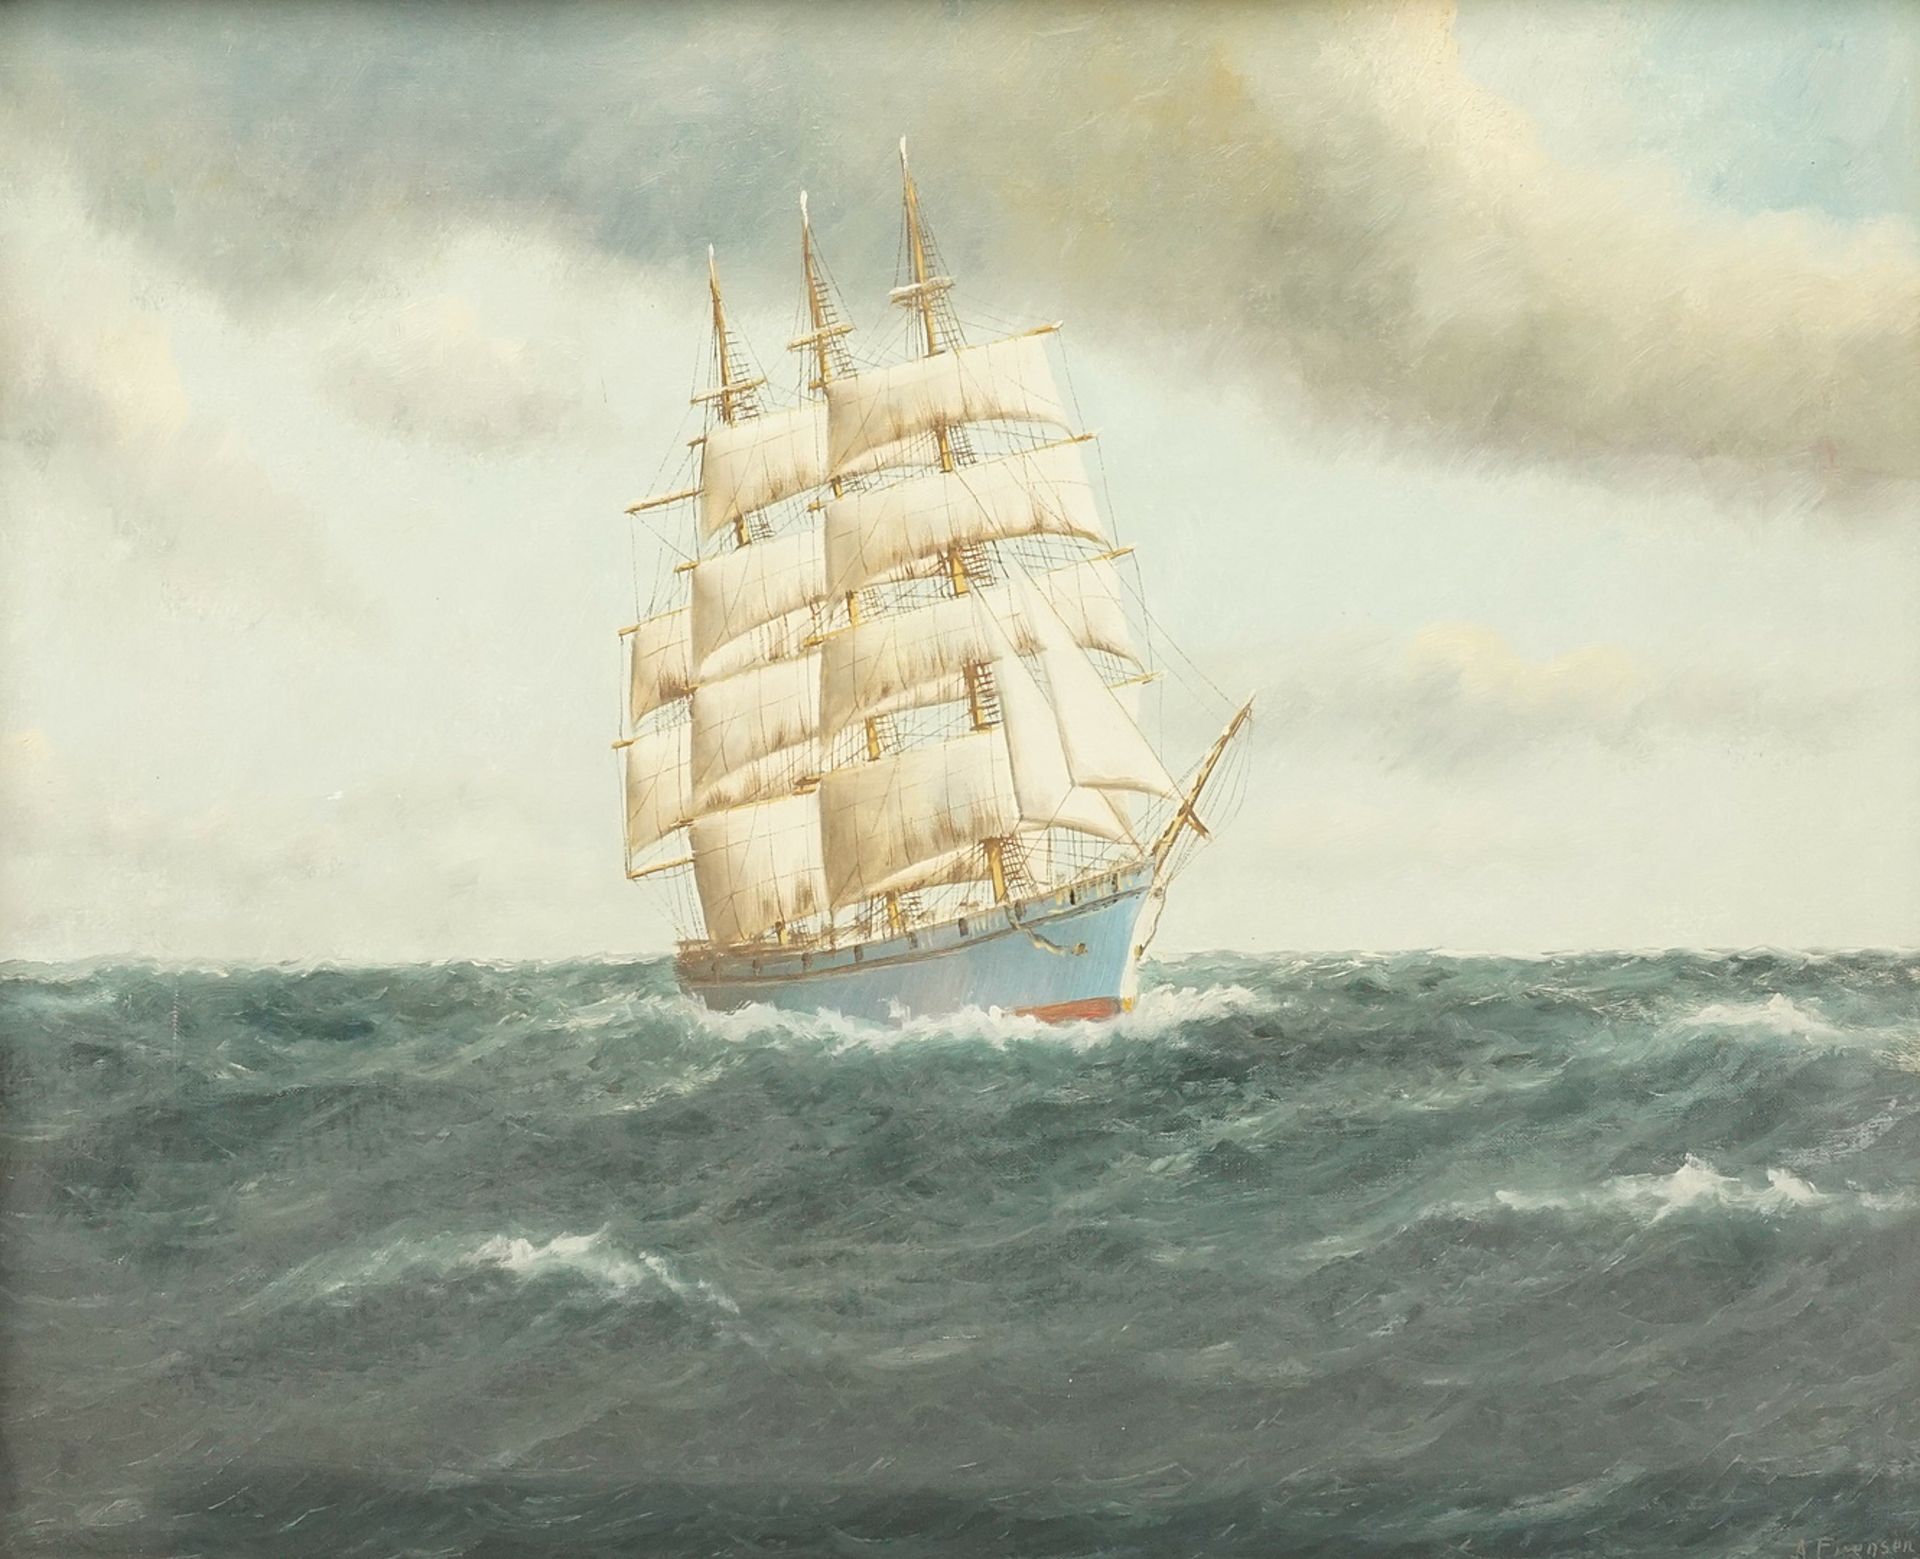 A. Frensen, Three-masted barque on the high seas